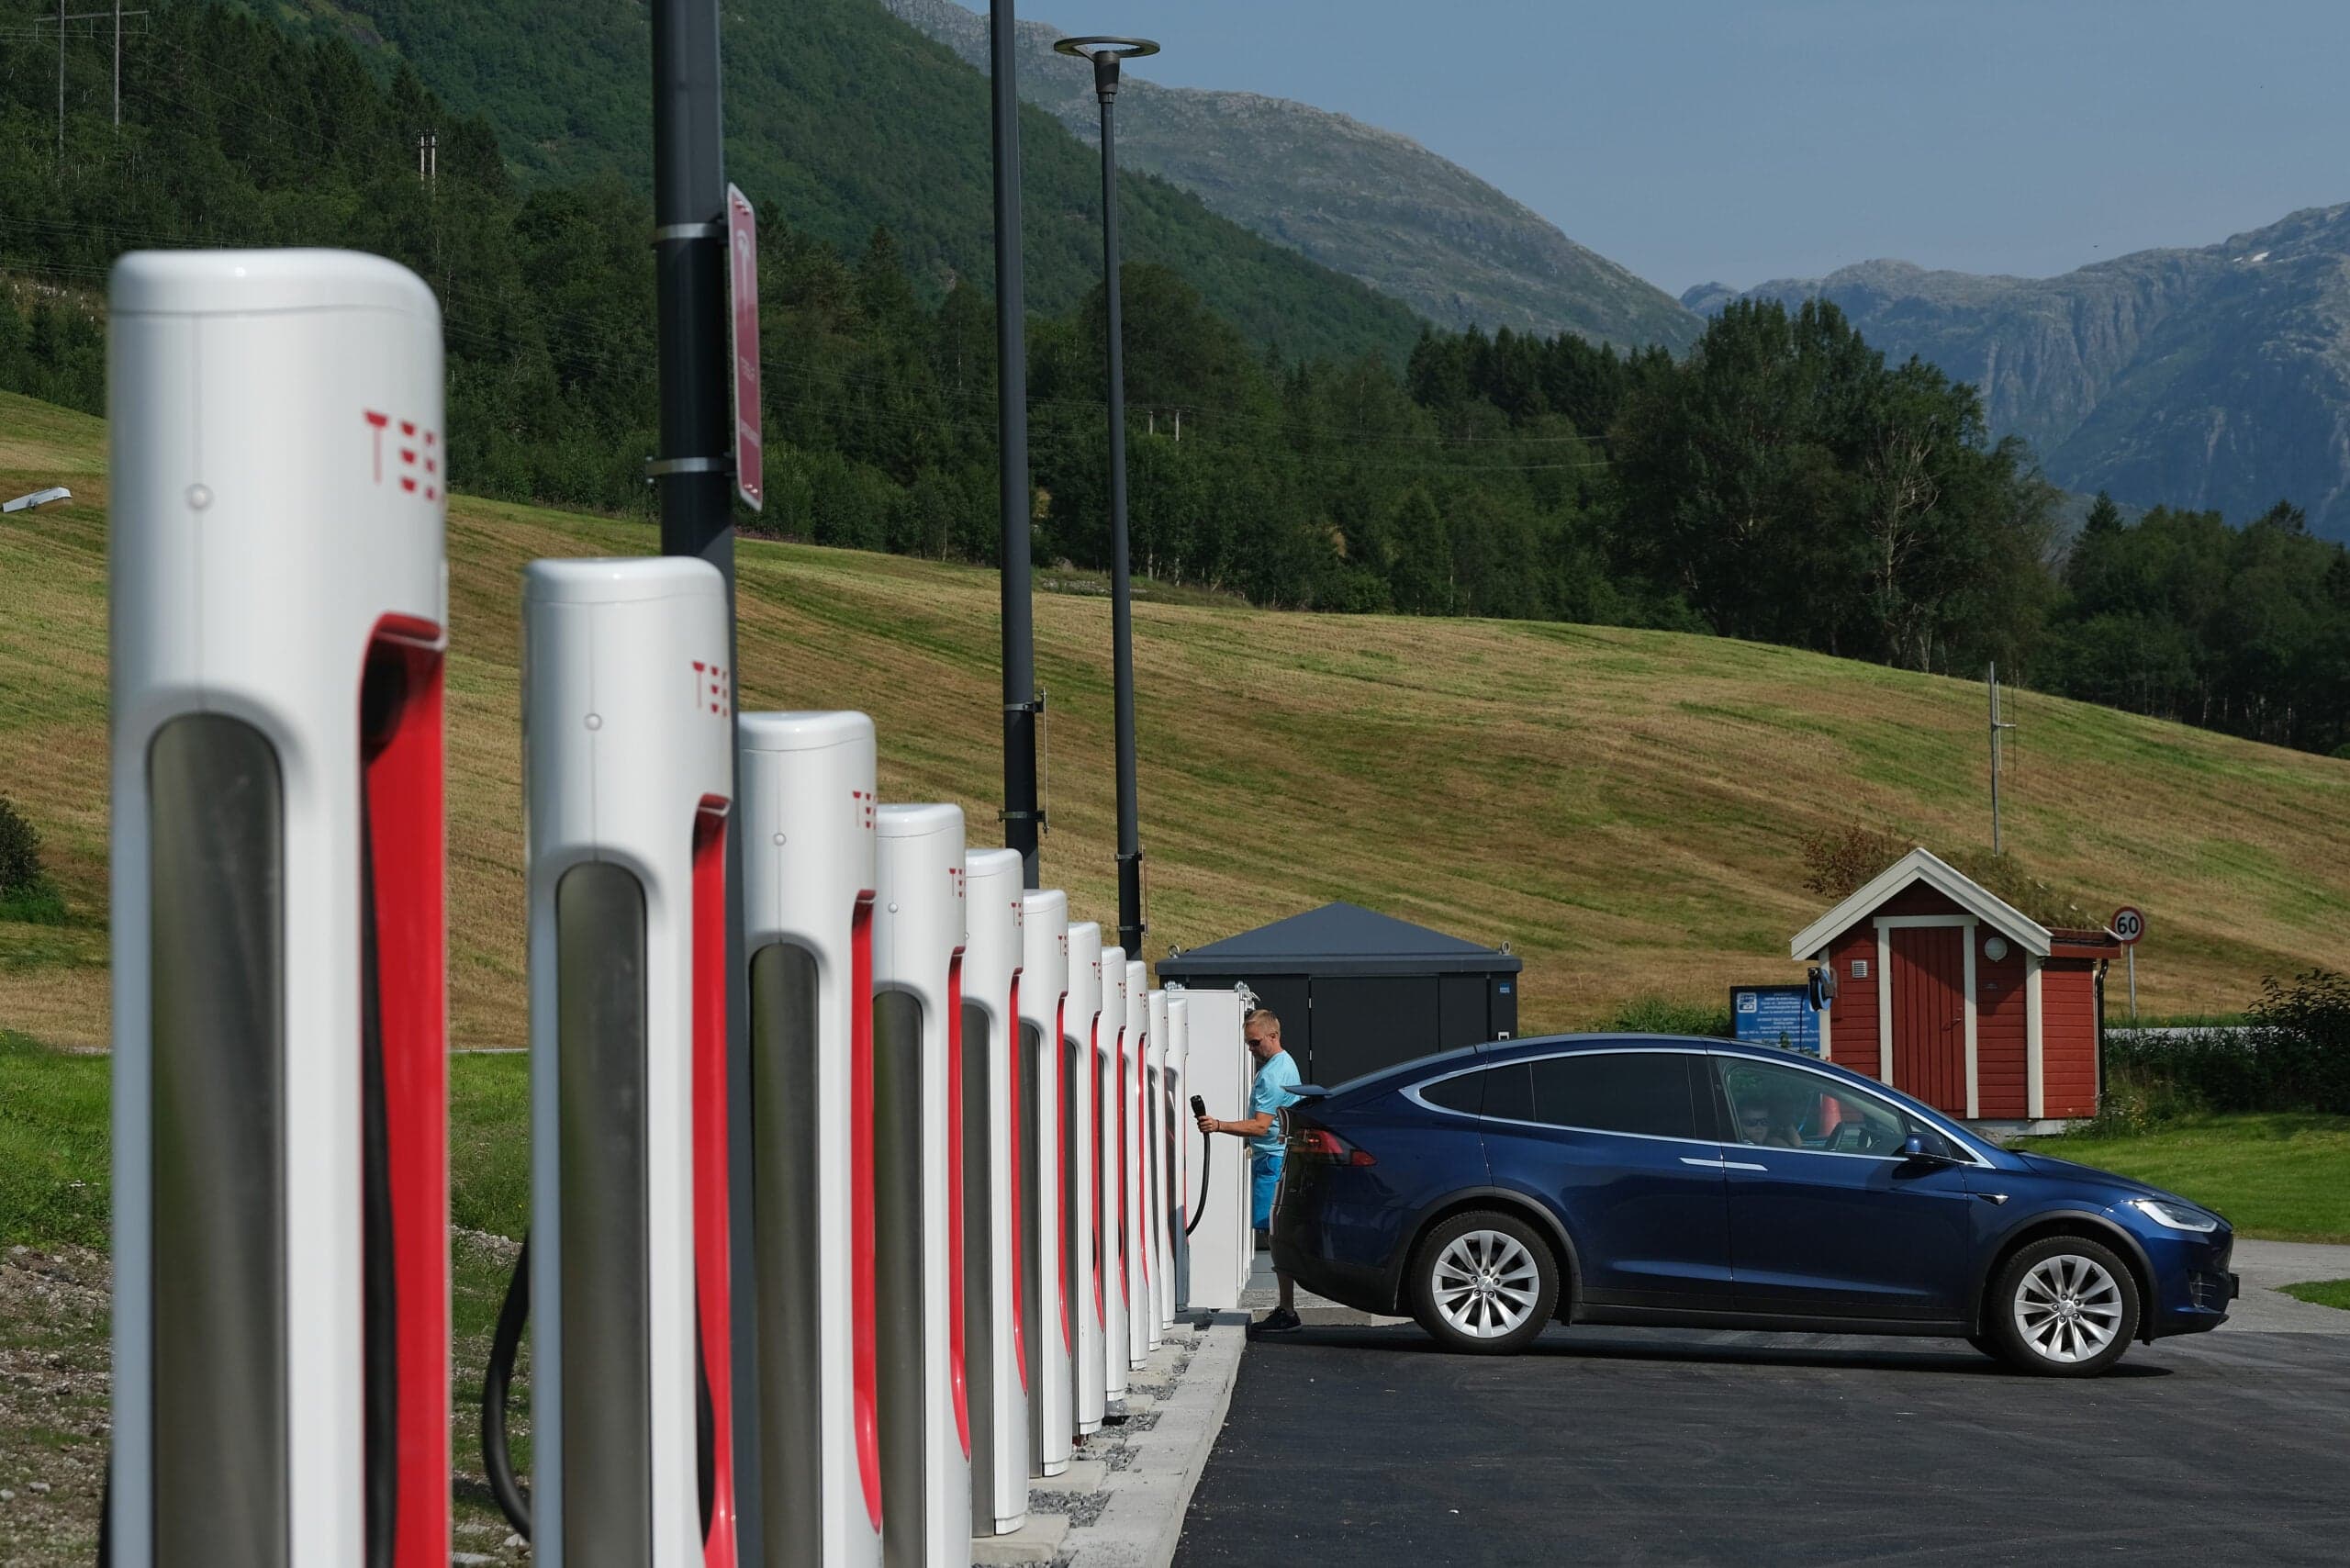 Tesla charging points in a rural Norwegian setting